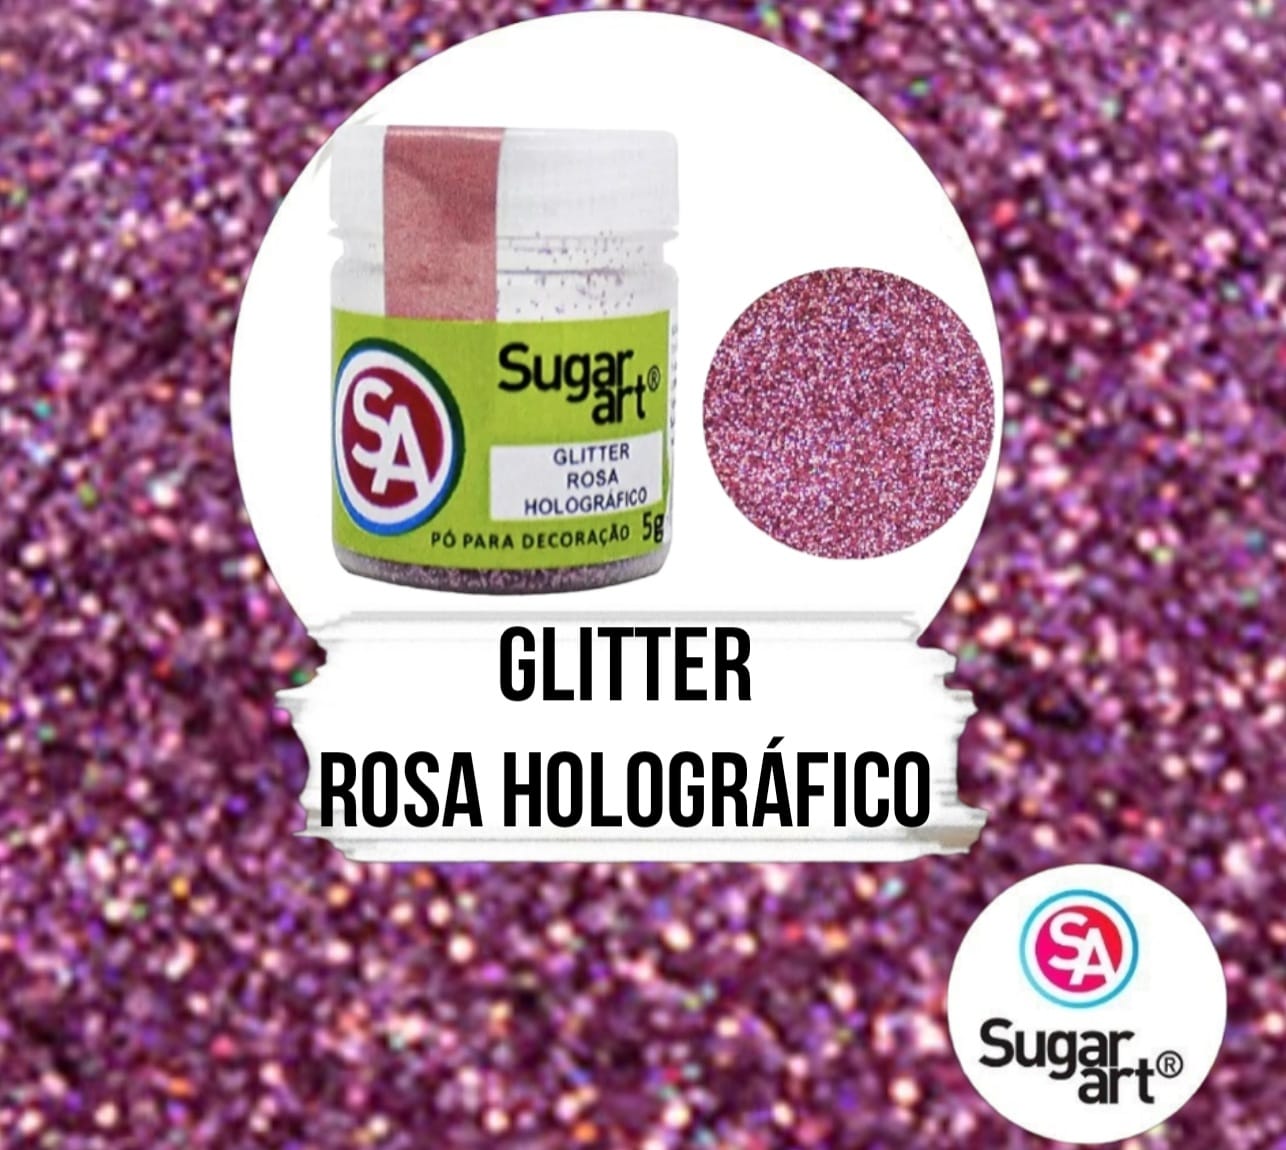 Glitter Brillantina Sugar Art ROSA HOLOGRÁFICO 5g